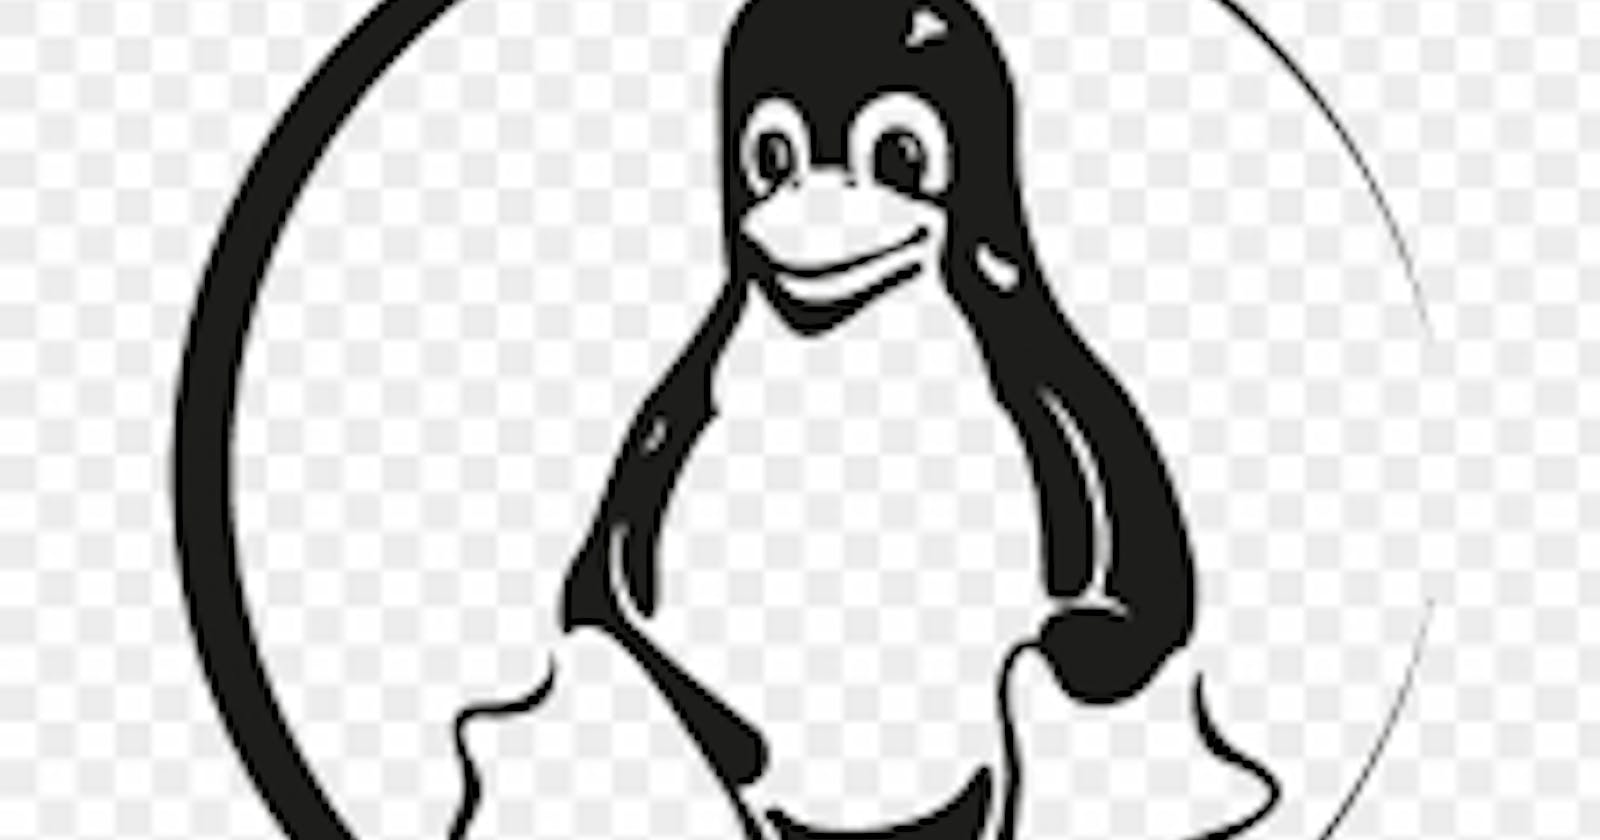 Basics Linux commands (cheat sheet).